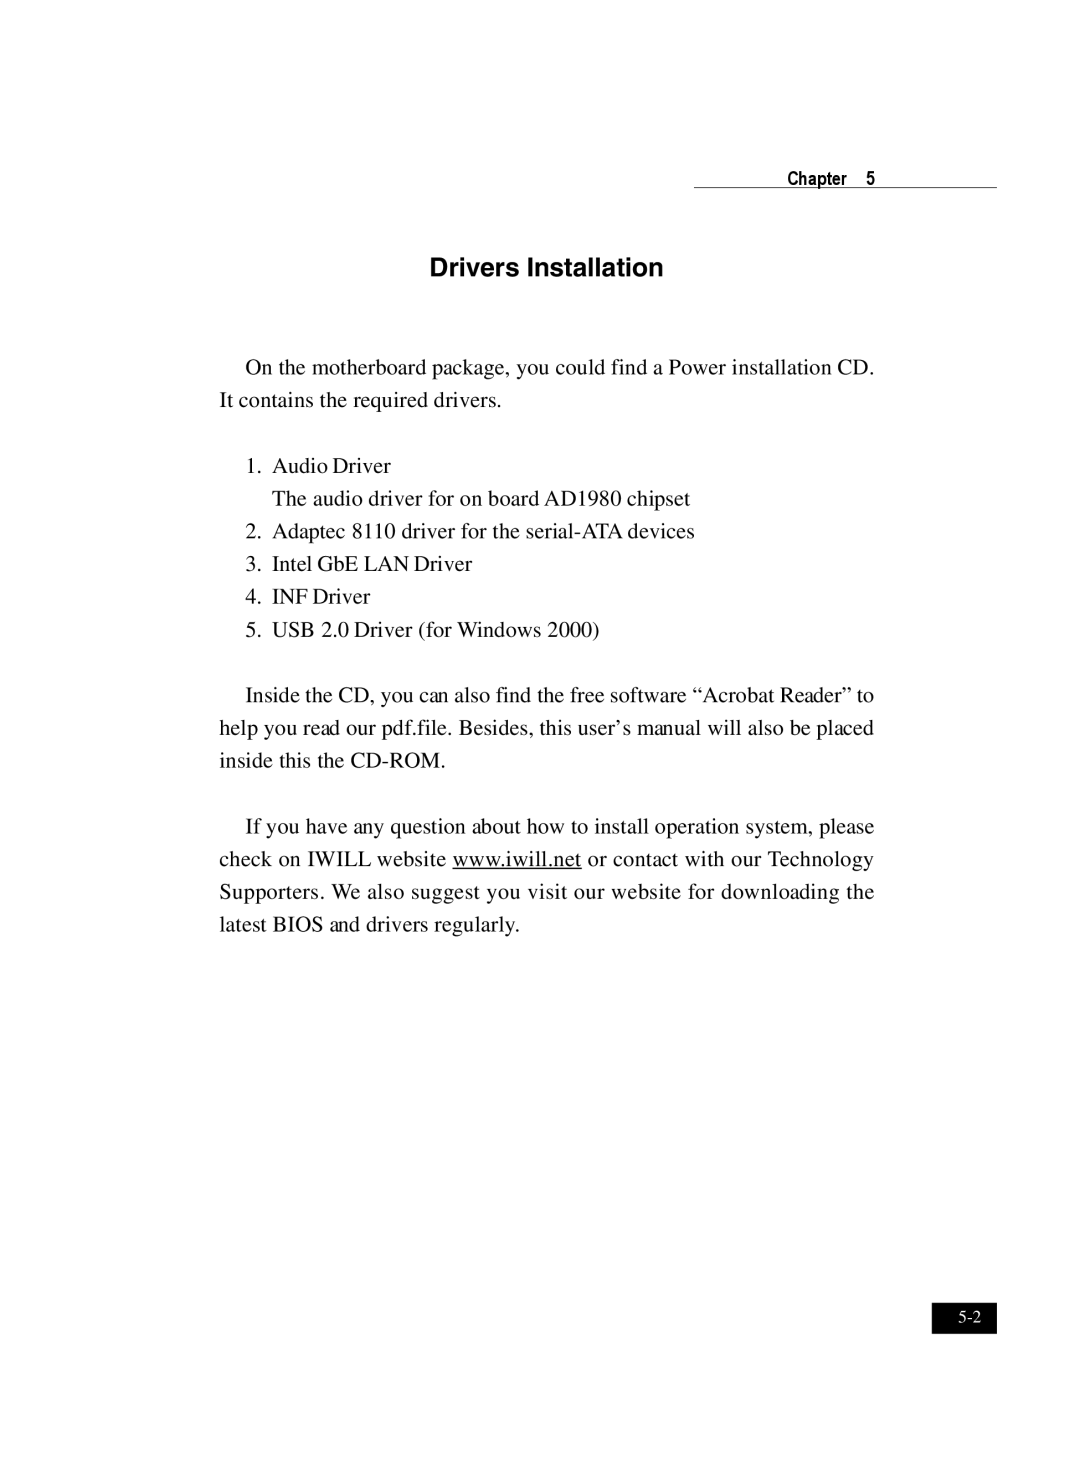 IBM DJ800 user manual Drivers Installation 